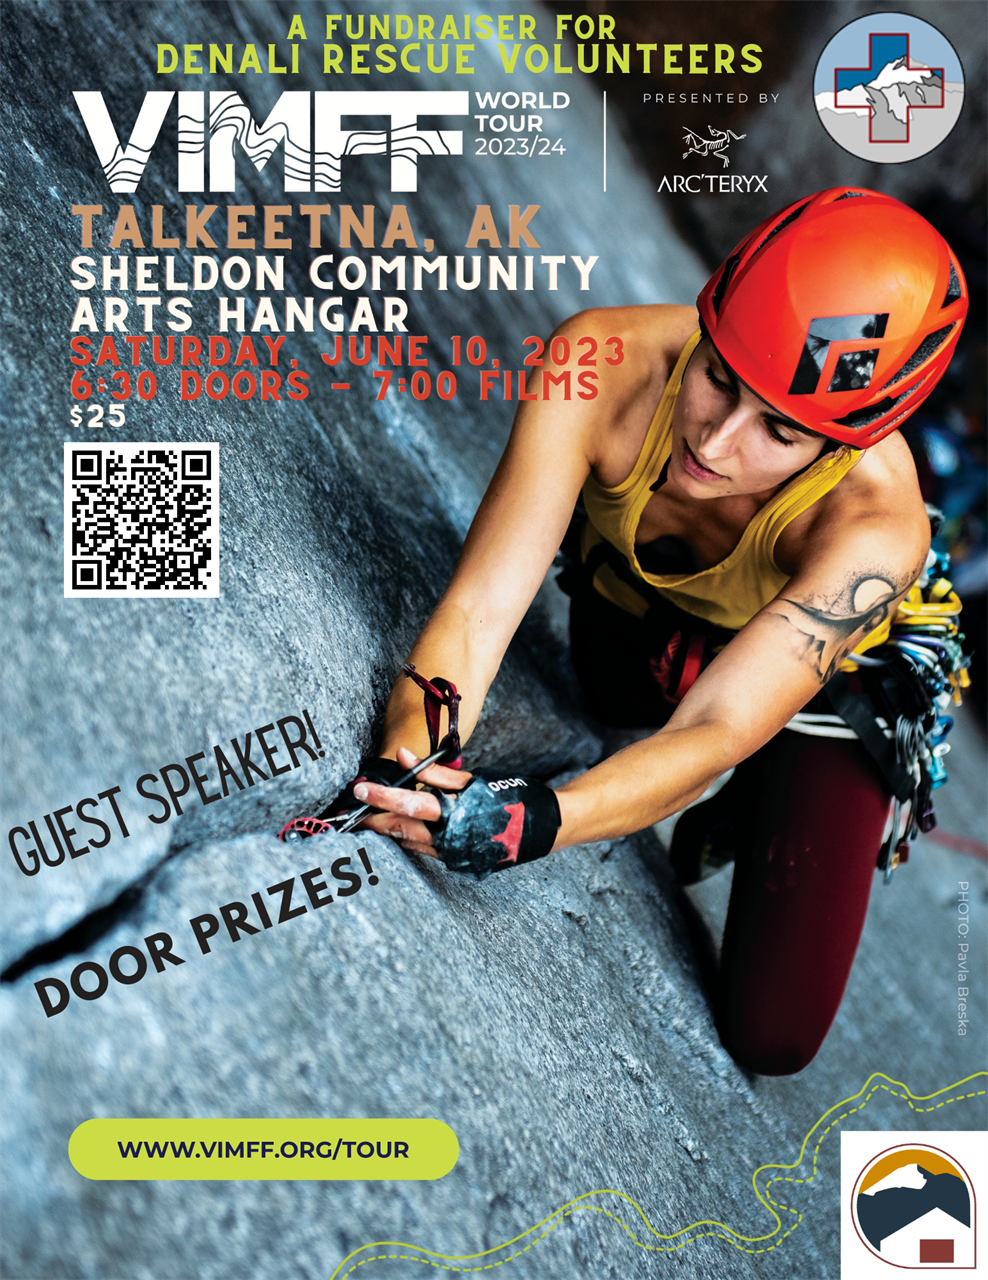 DRV Fundraiser Poster of a climber on a rock face